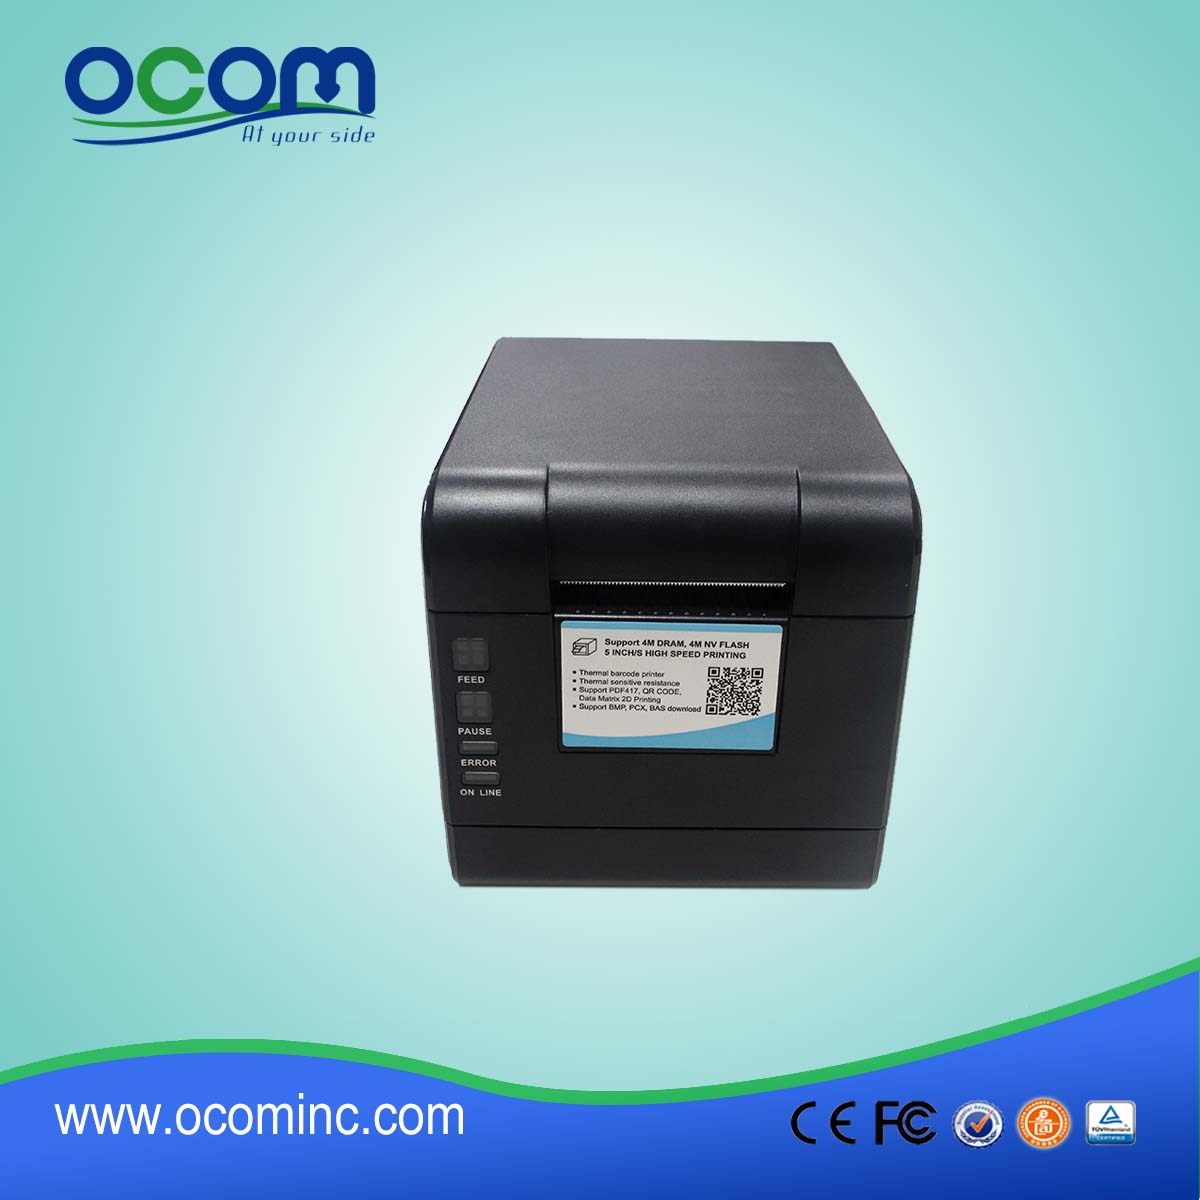 OCBP-006-U 2 Zoll Thermodirekt-Etikettendrucker